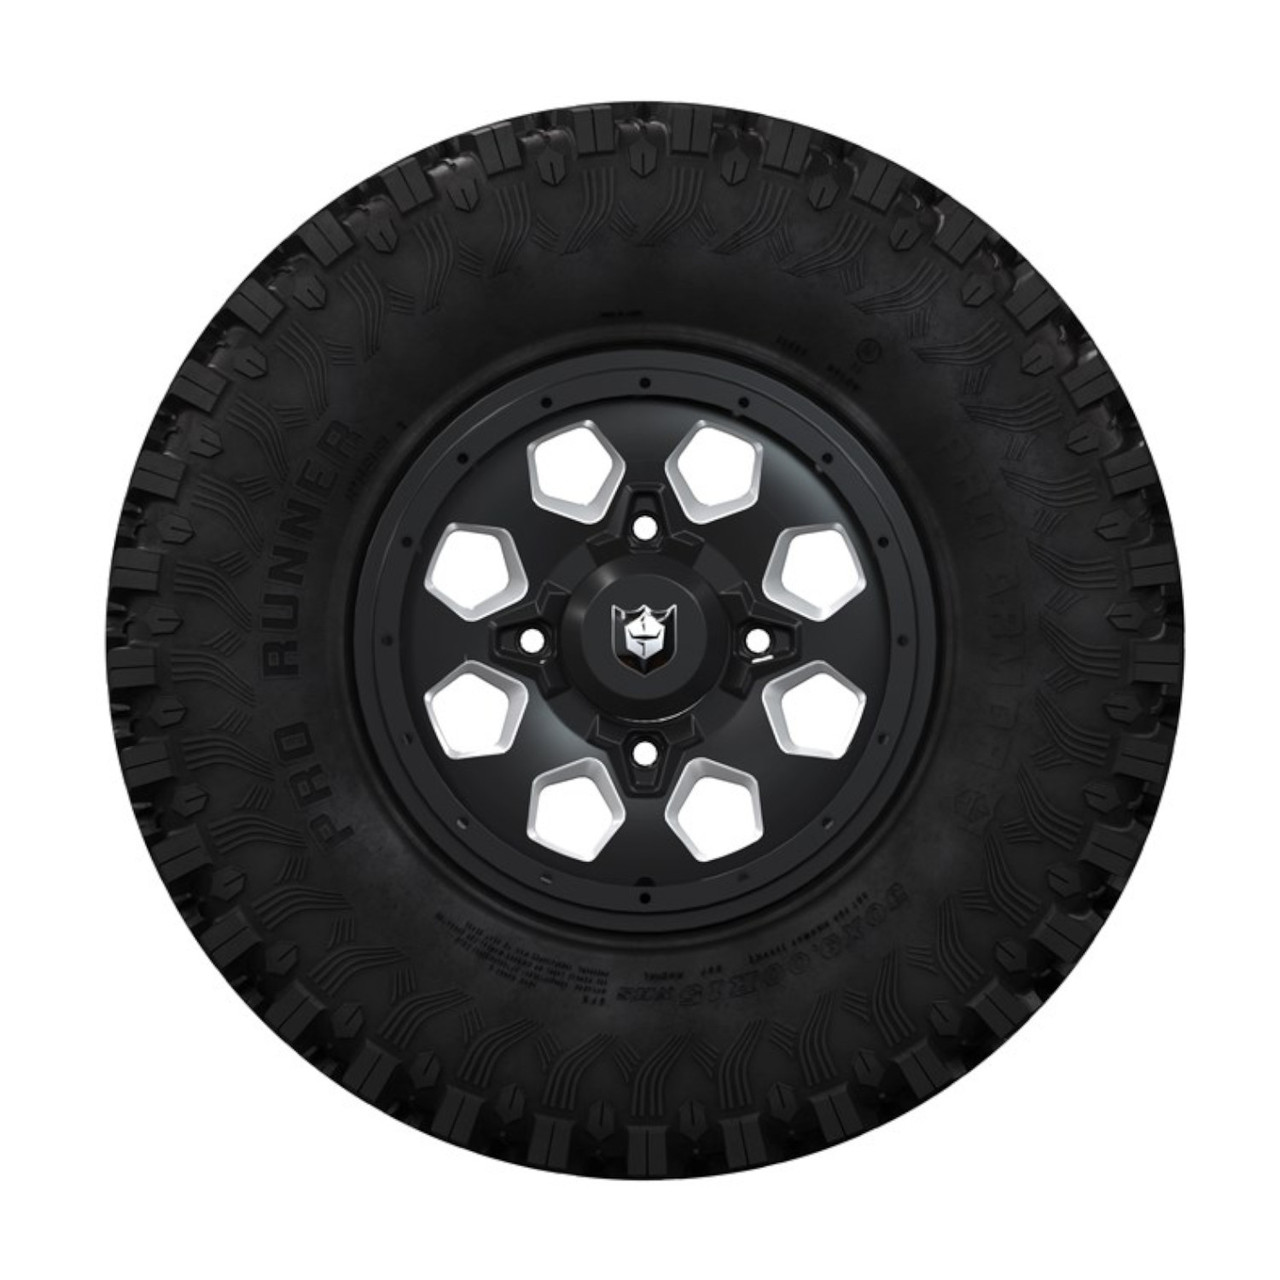 Polaris New OEM, Pro Armor Runner Wheel & Tire Set, Hexlr, 30x9R15, 2885028